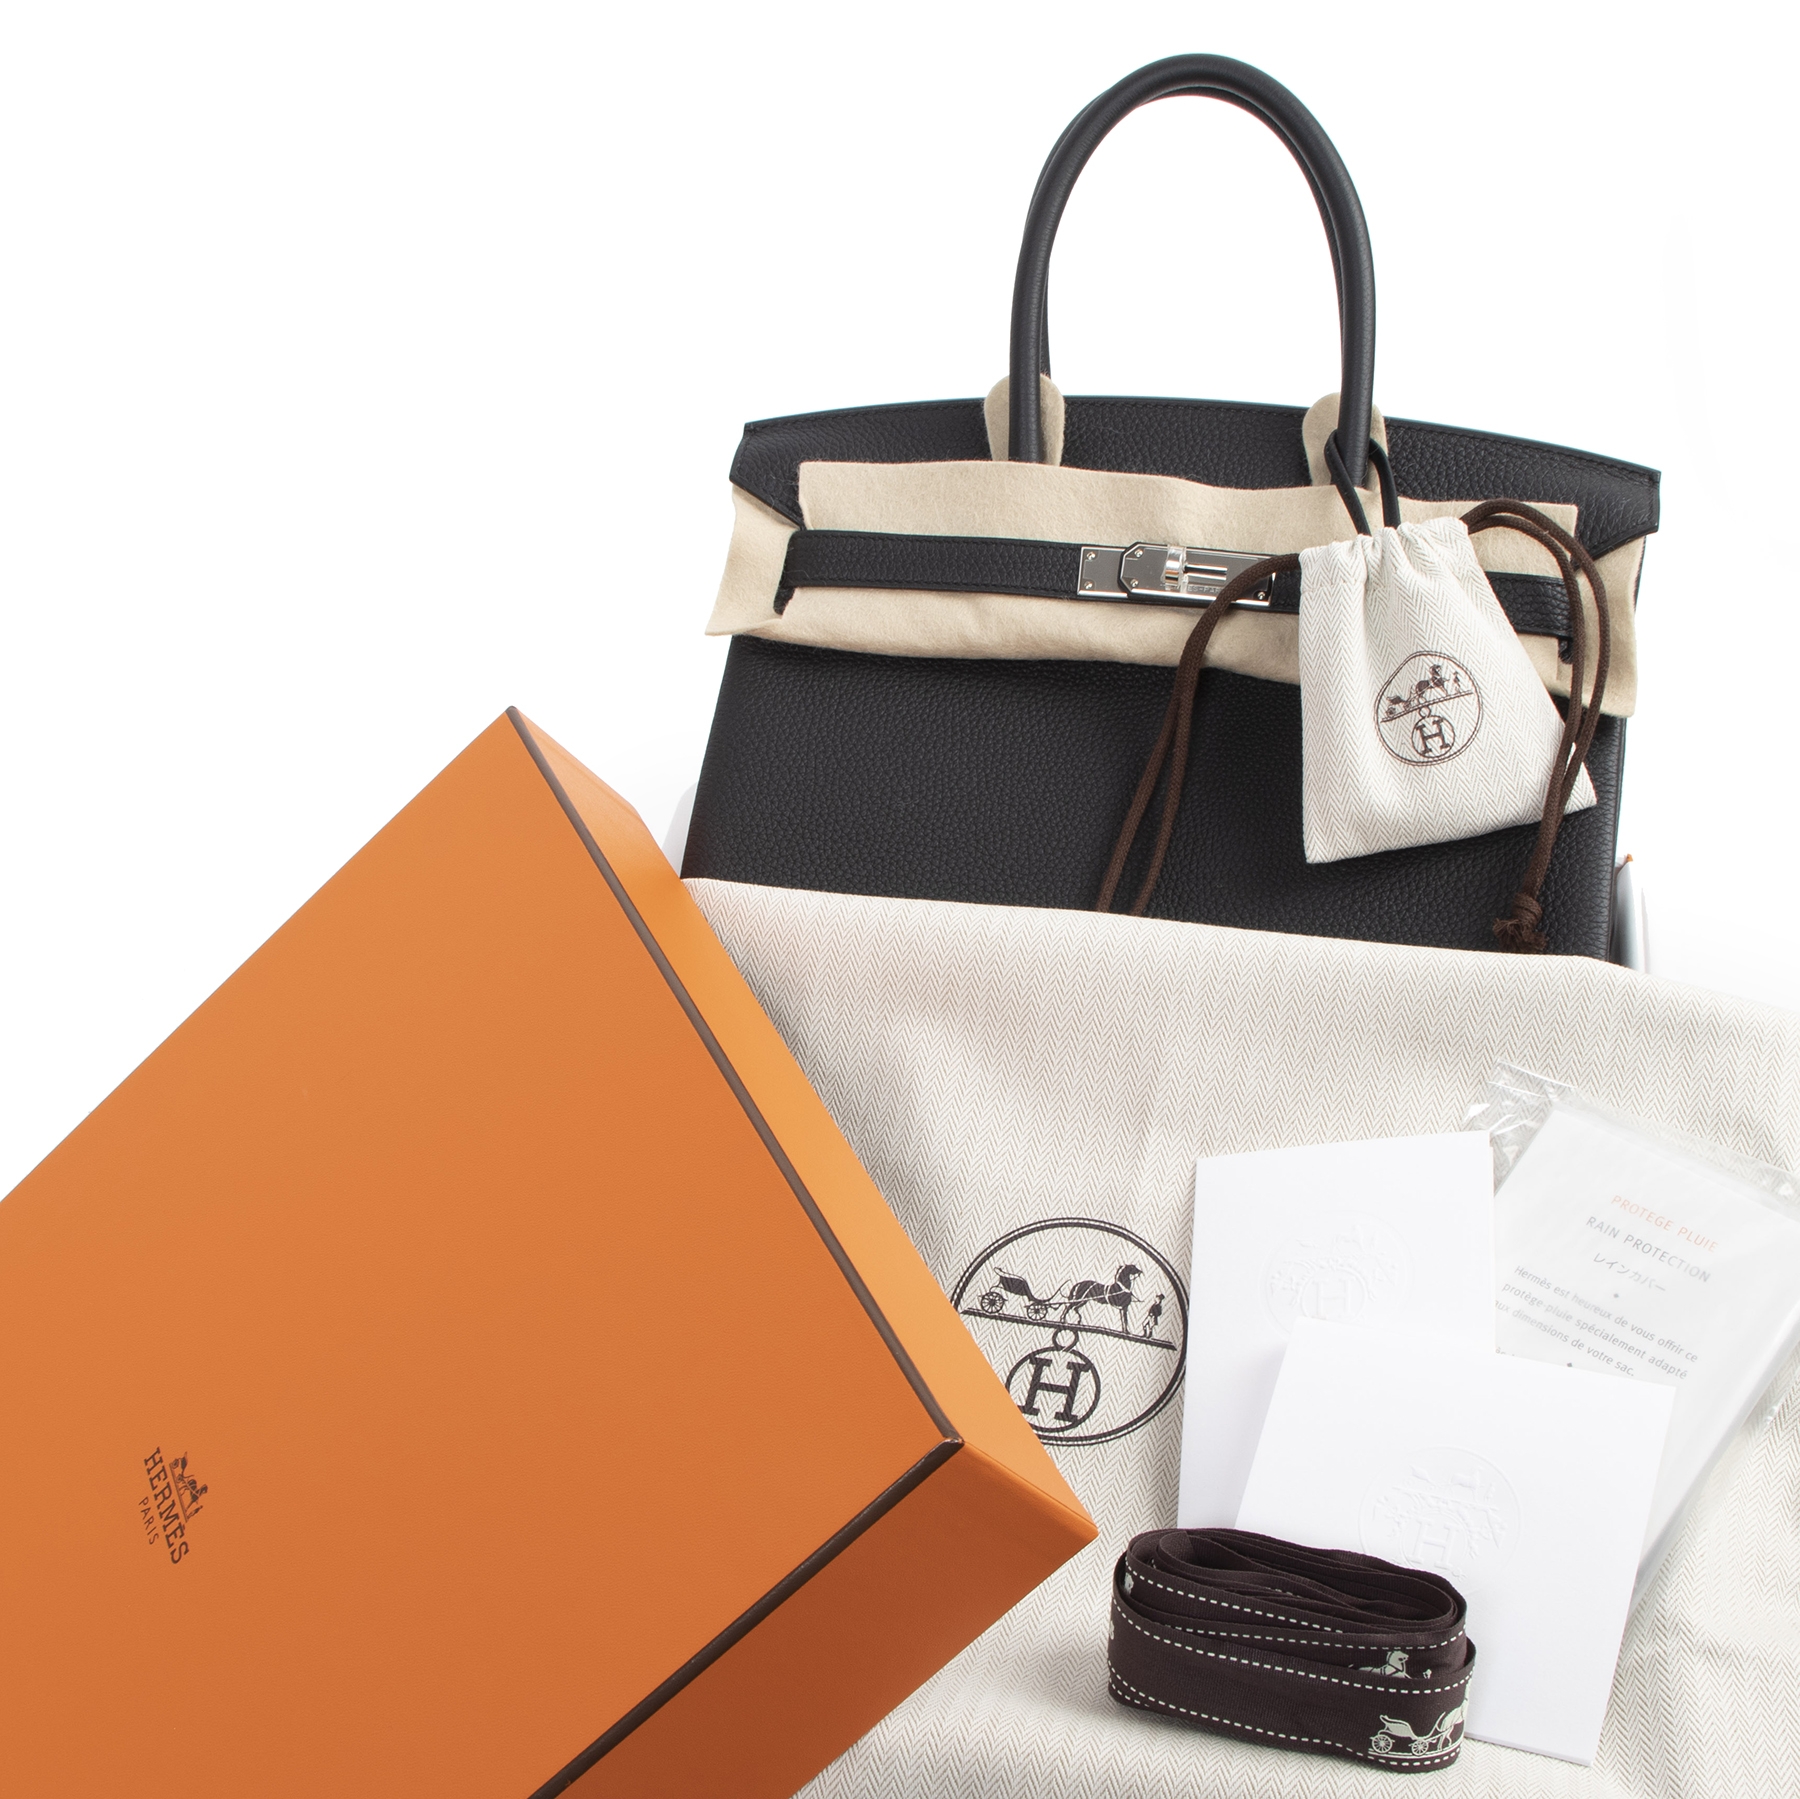 Top 10 Interesting Facts on the Hermes Birkin Bags - Aspire Luxury